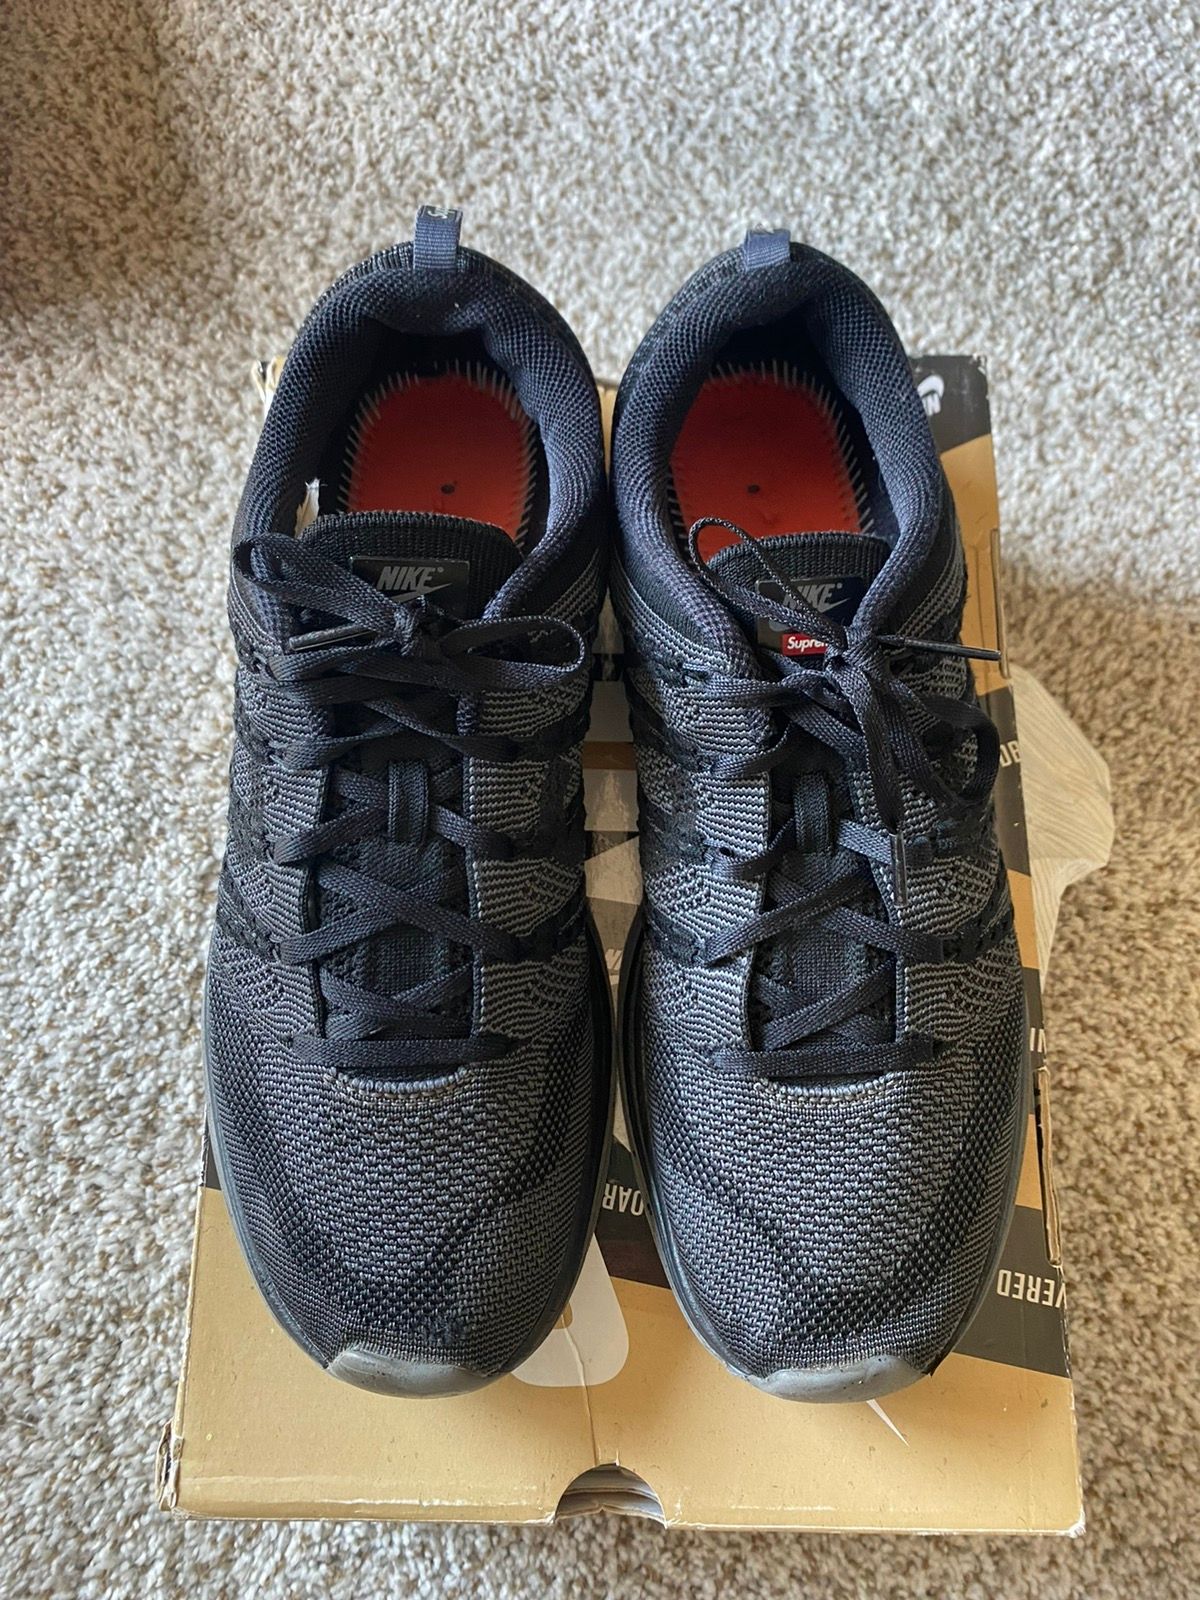 Pre-owned Nike X Supreme Nike Flyknit Lunar1+ Black 2013 Shoes